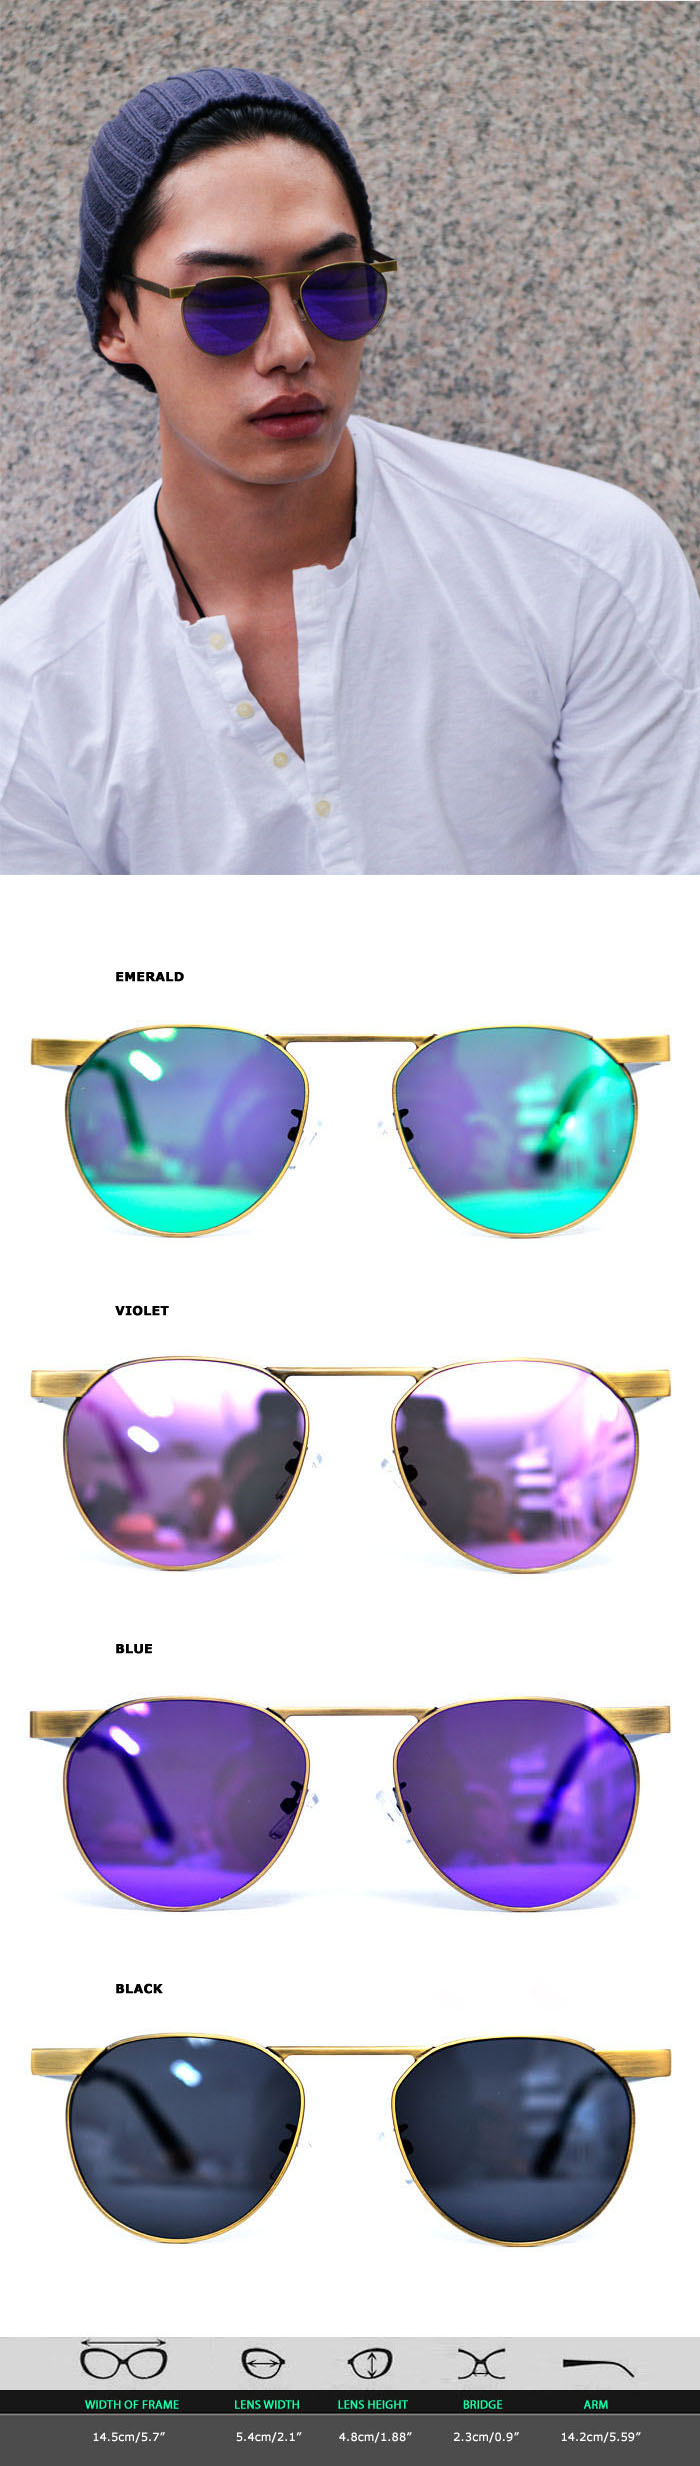 Sunglasses97_1